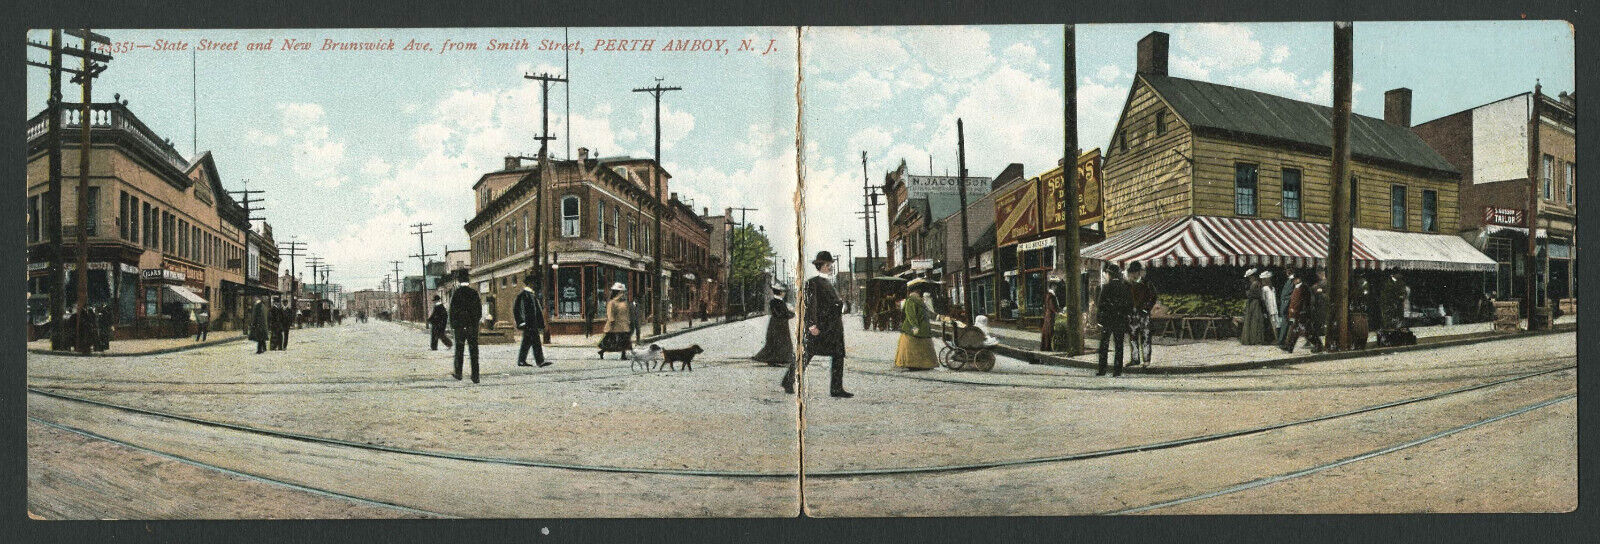 Perth Amboy NJ: c.1907 Panoramic Postcard STATE ST, NEW BRUNSWICK AVE FROM STATE